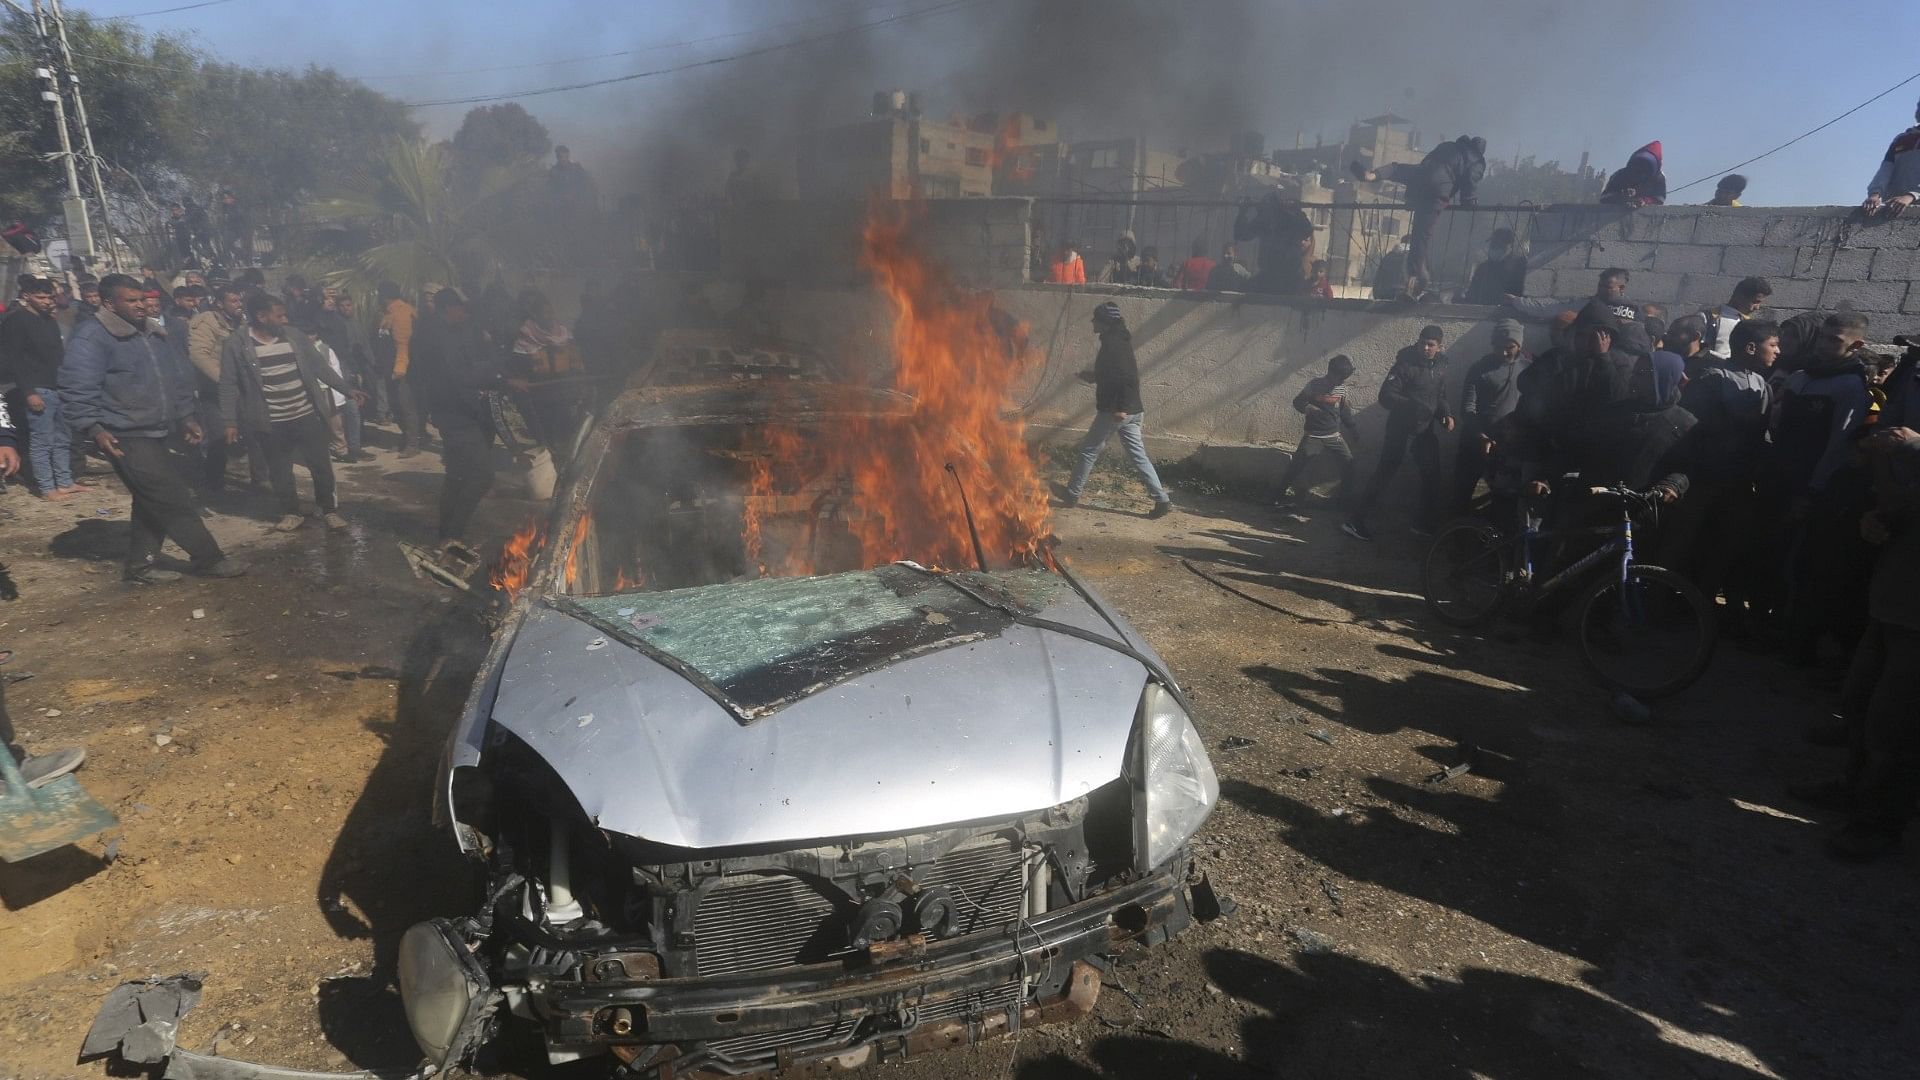 <div class="paragraphs"><p>Palestinians watch a car burn after it was hit by an Israeli in Rafah, Gaza Strip.&nbsp;</p></div>